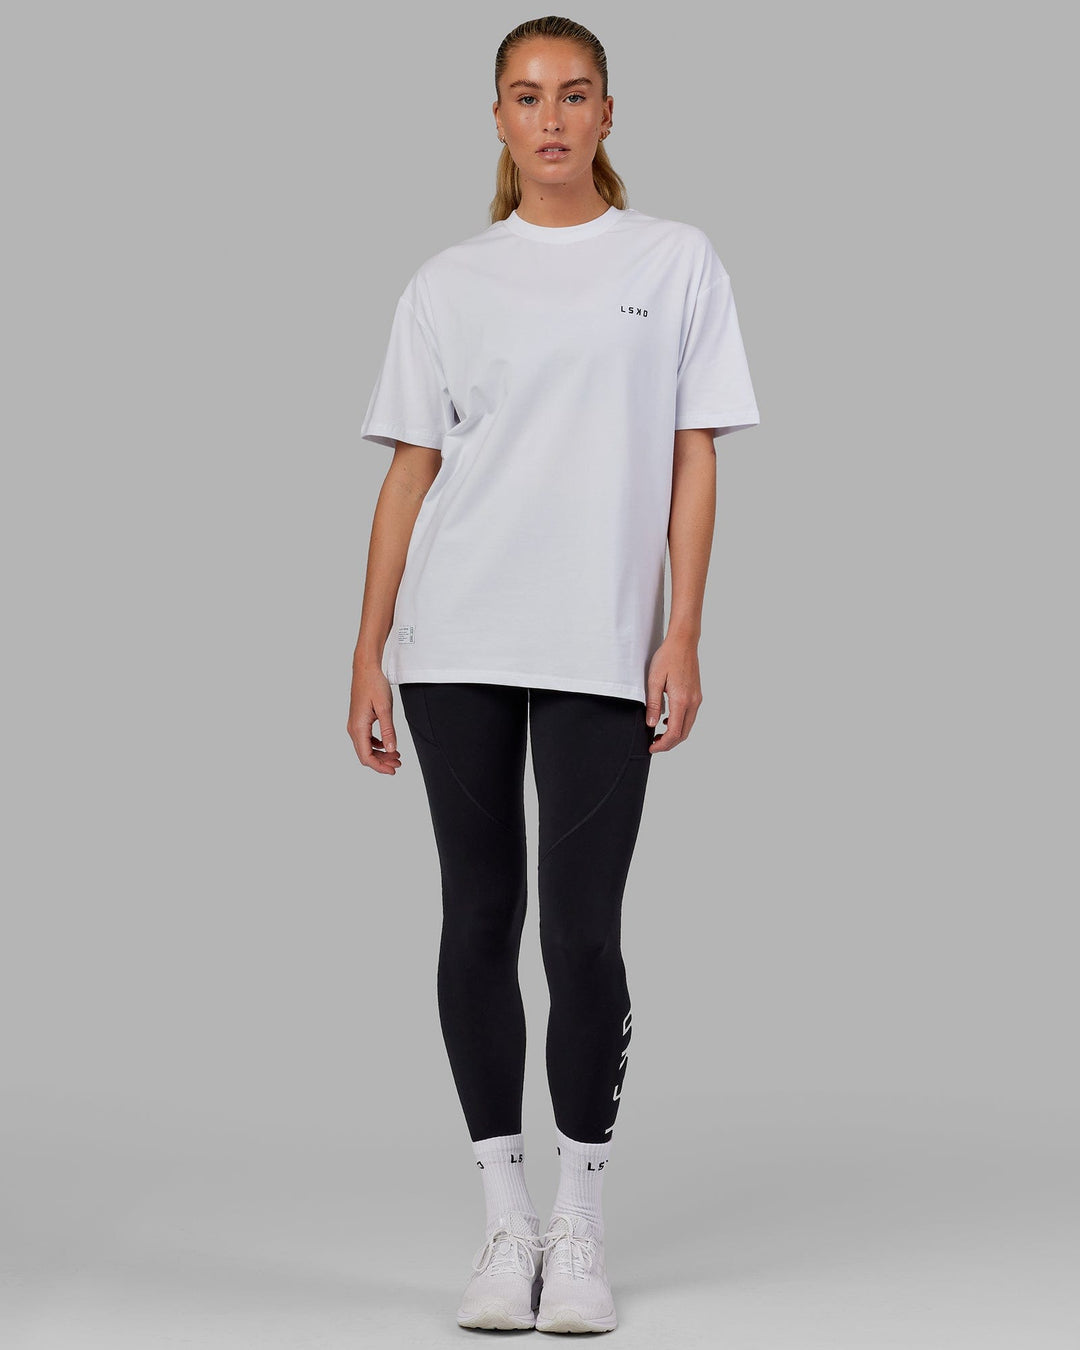 Woman wearing Unisex VS6 FLXCotton Tee Oversize - White-Black